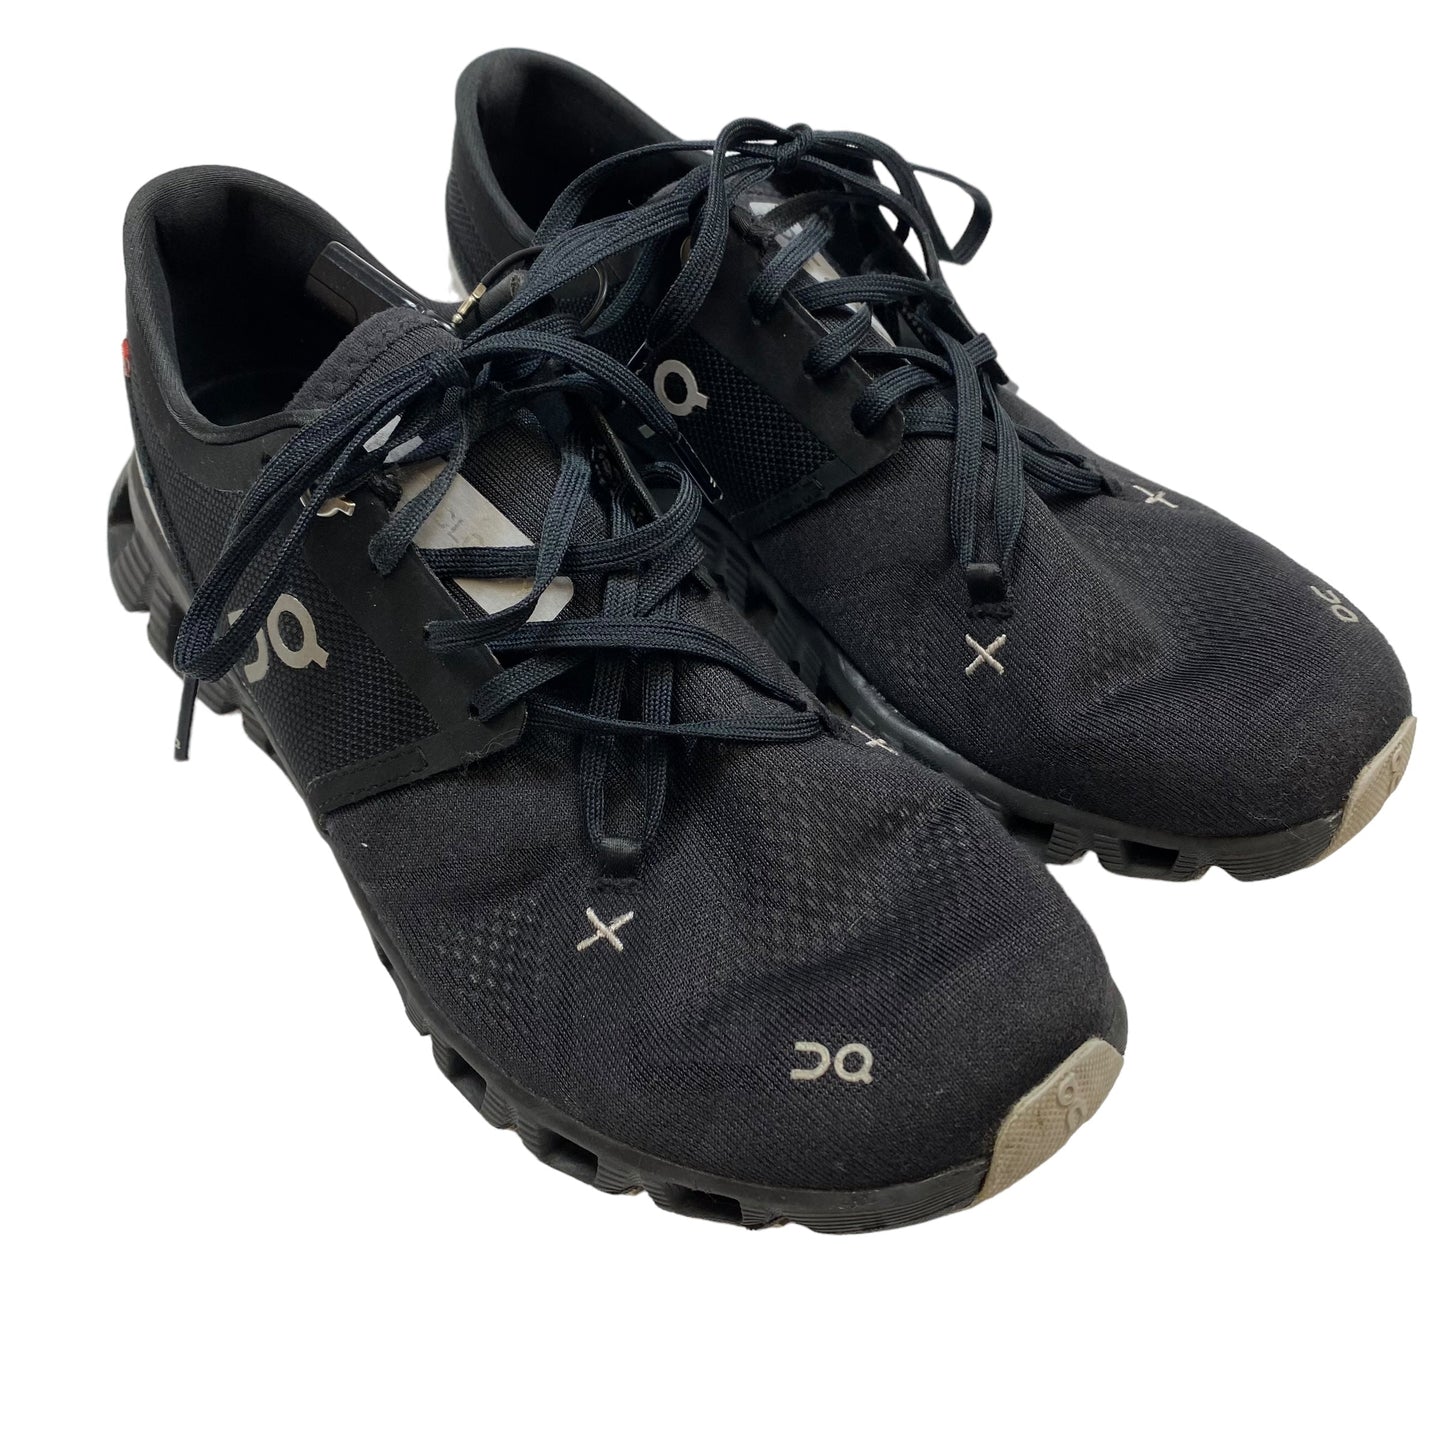 Black Shoes Athletic On Cloud, Size 9